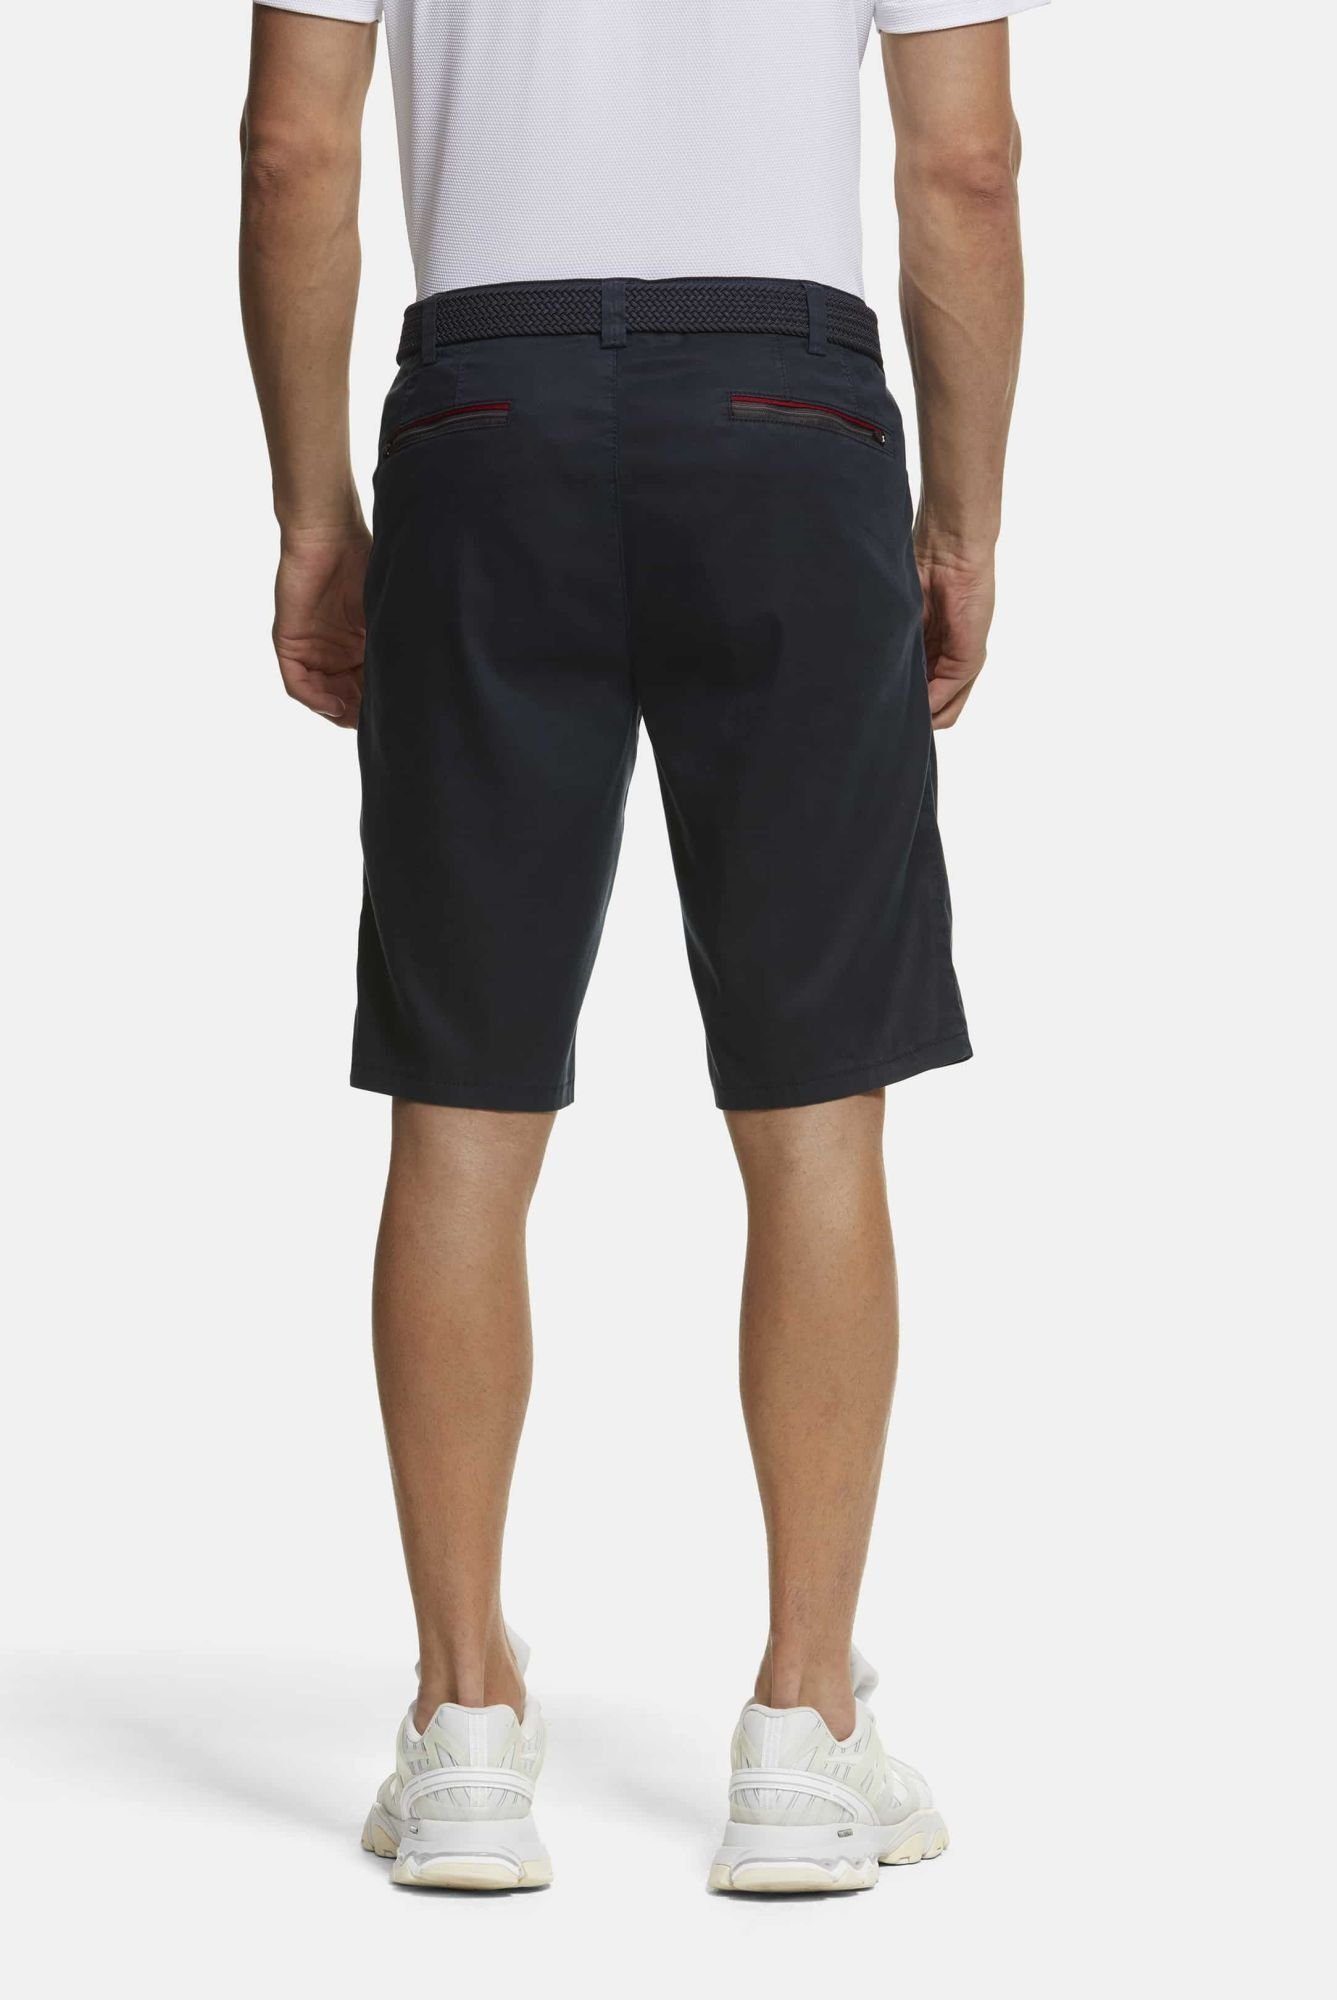 MEYER mit Shorts Shirt-Stopper B-Arran marine